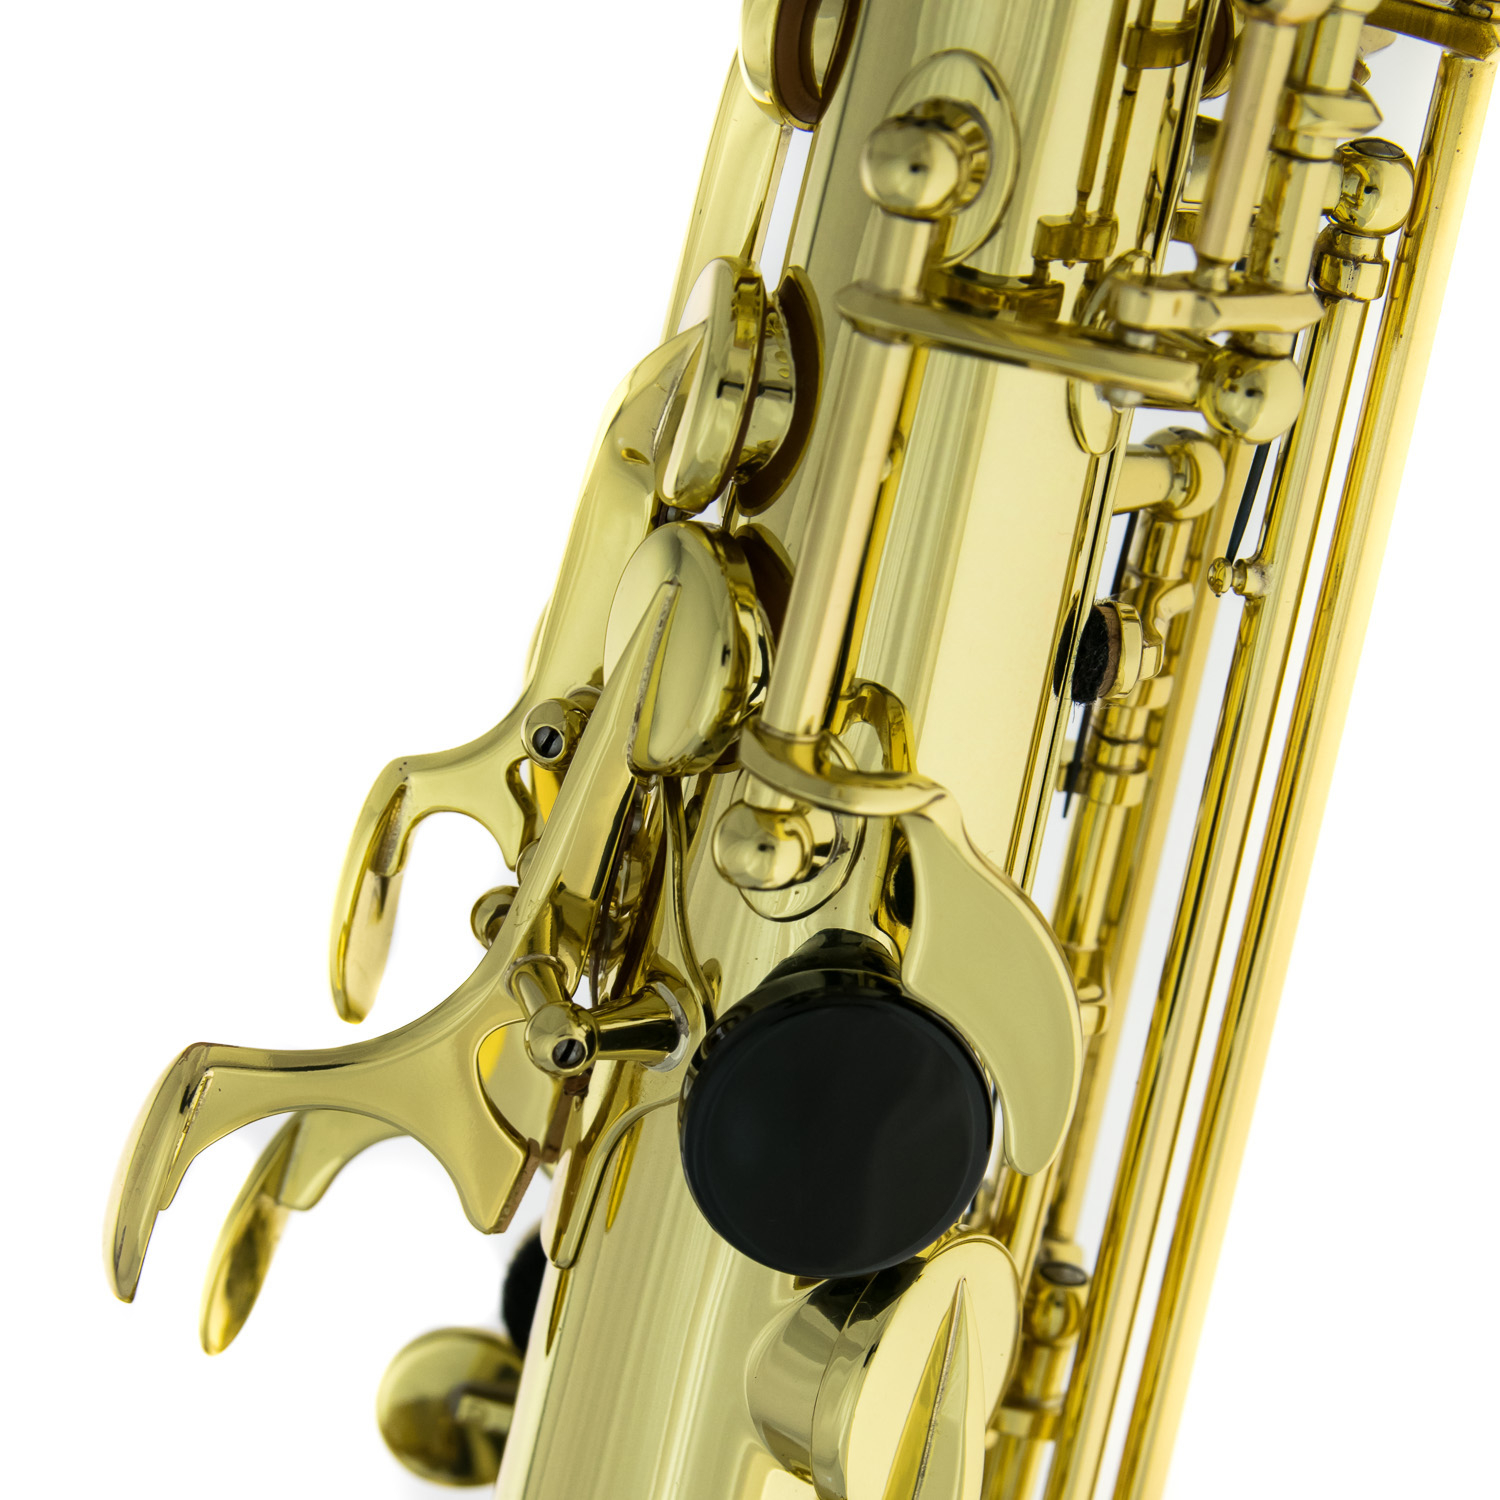 Selmer Axos Alto Saxophone